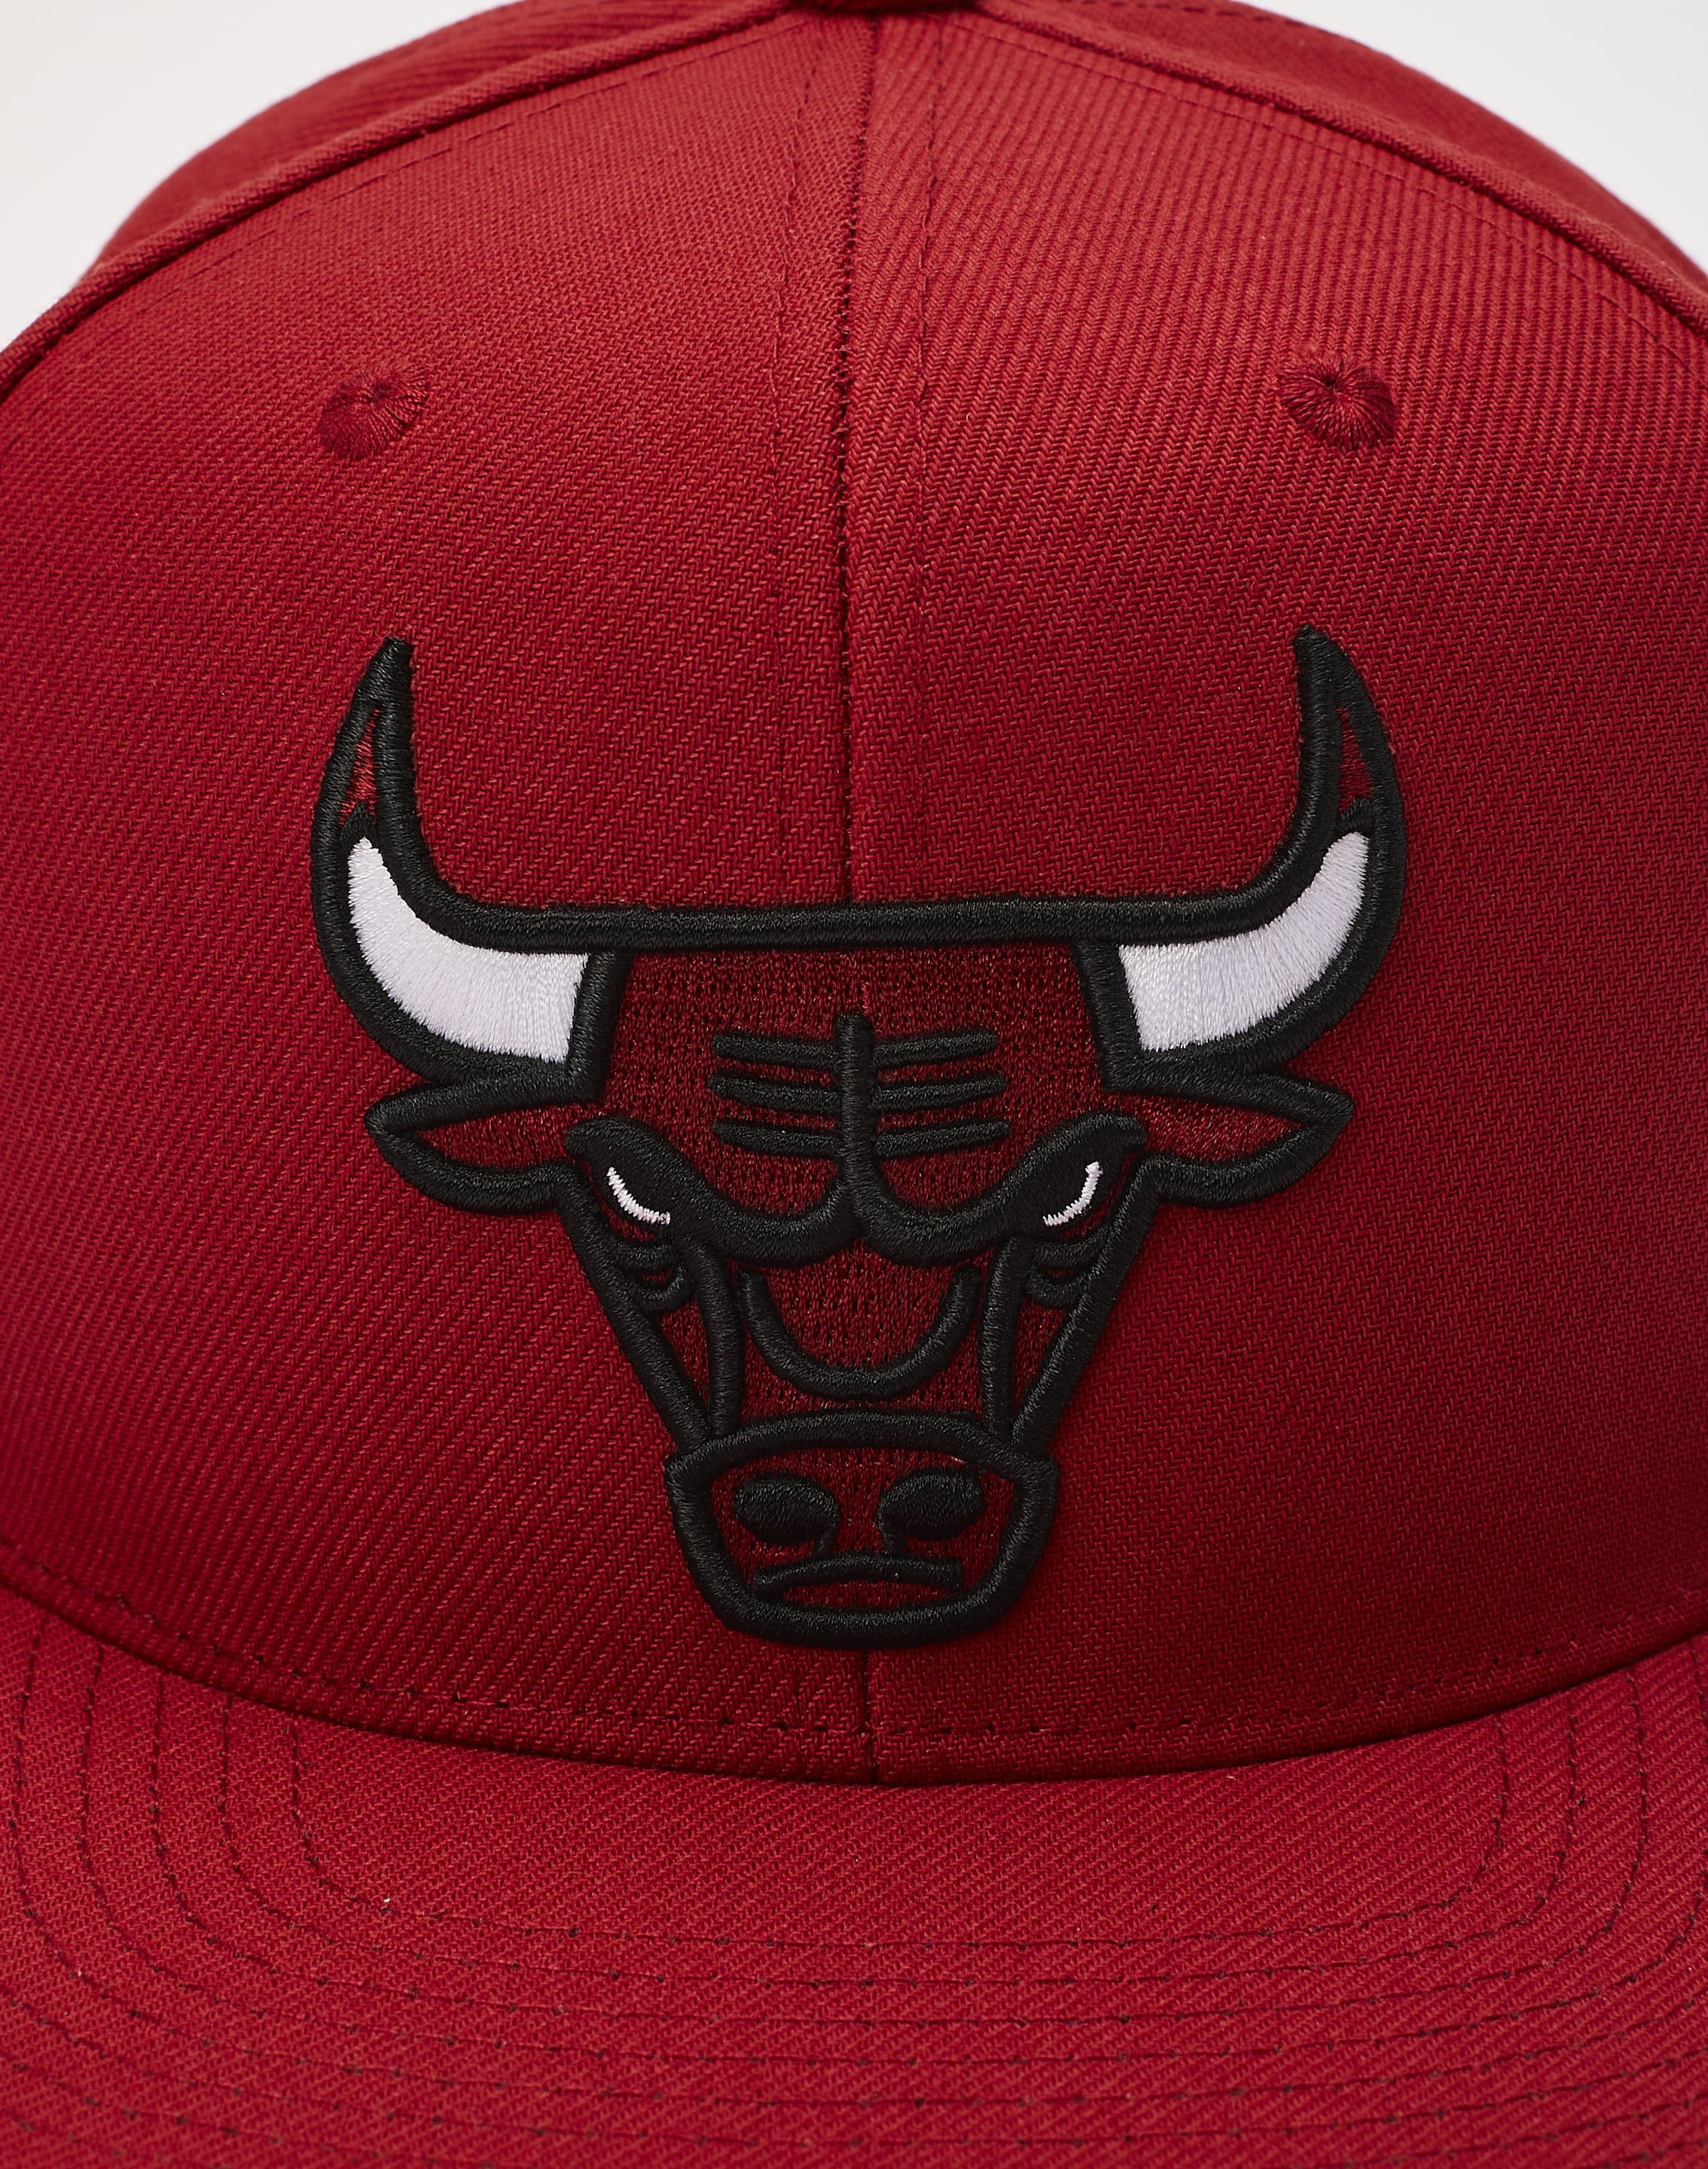 Mitchell & Ness Chicago Bulls 1997 NBA Finals Commemorative Snapback Hat -  Red